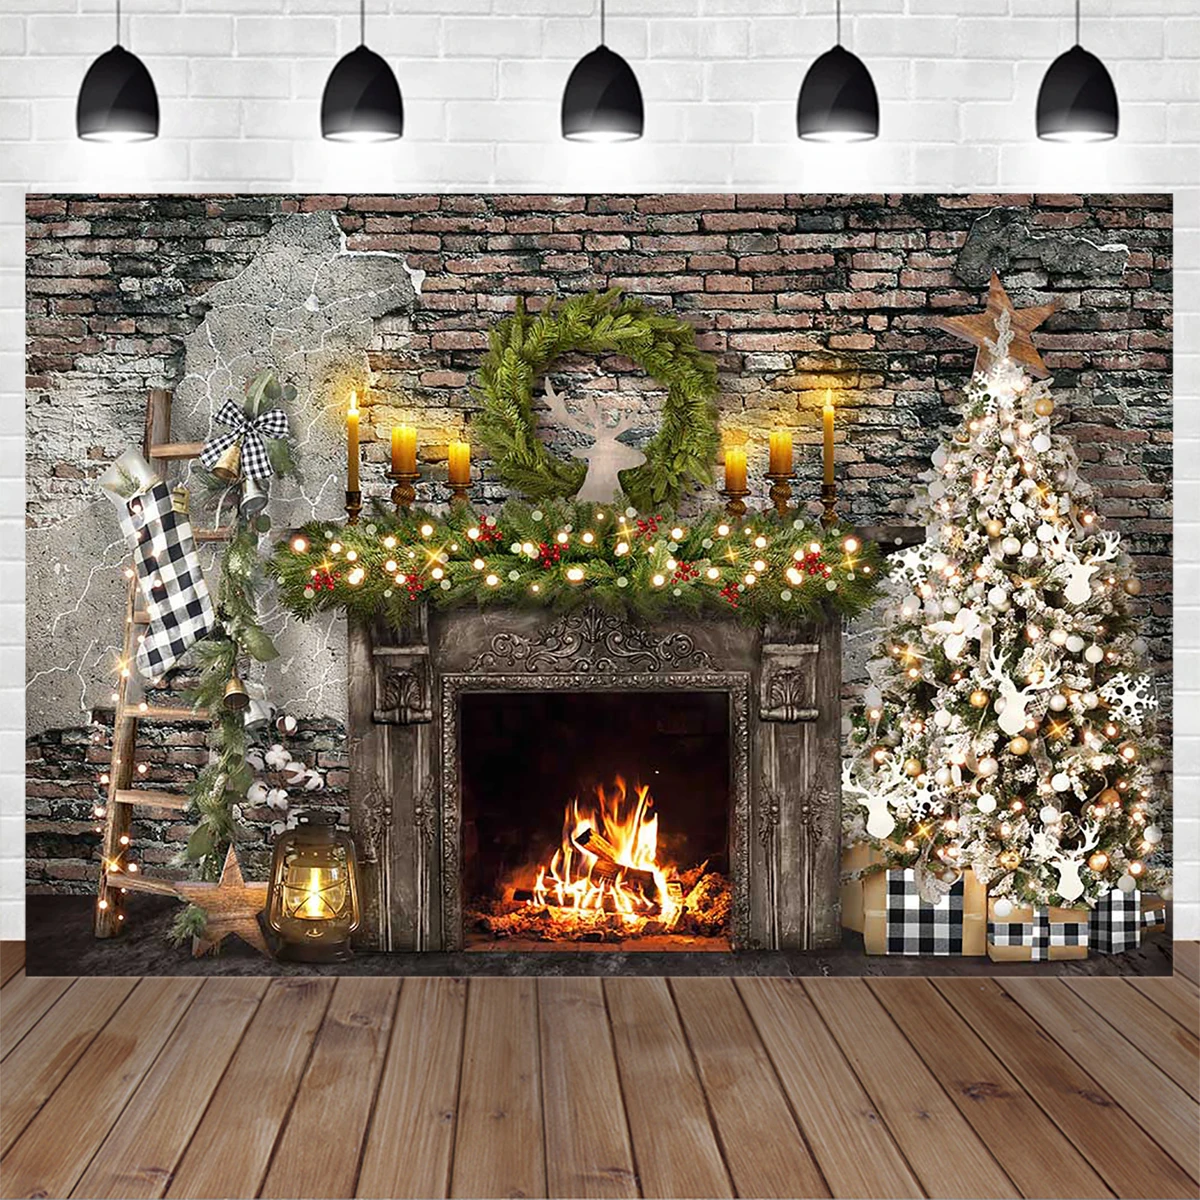 

Mocsicka Winter Christmas Fireplace Decoration Photo Background Xmas Tree Vintage Brick Wall Backdrop Home Portrait Shoot Props